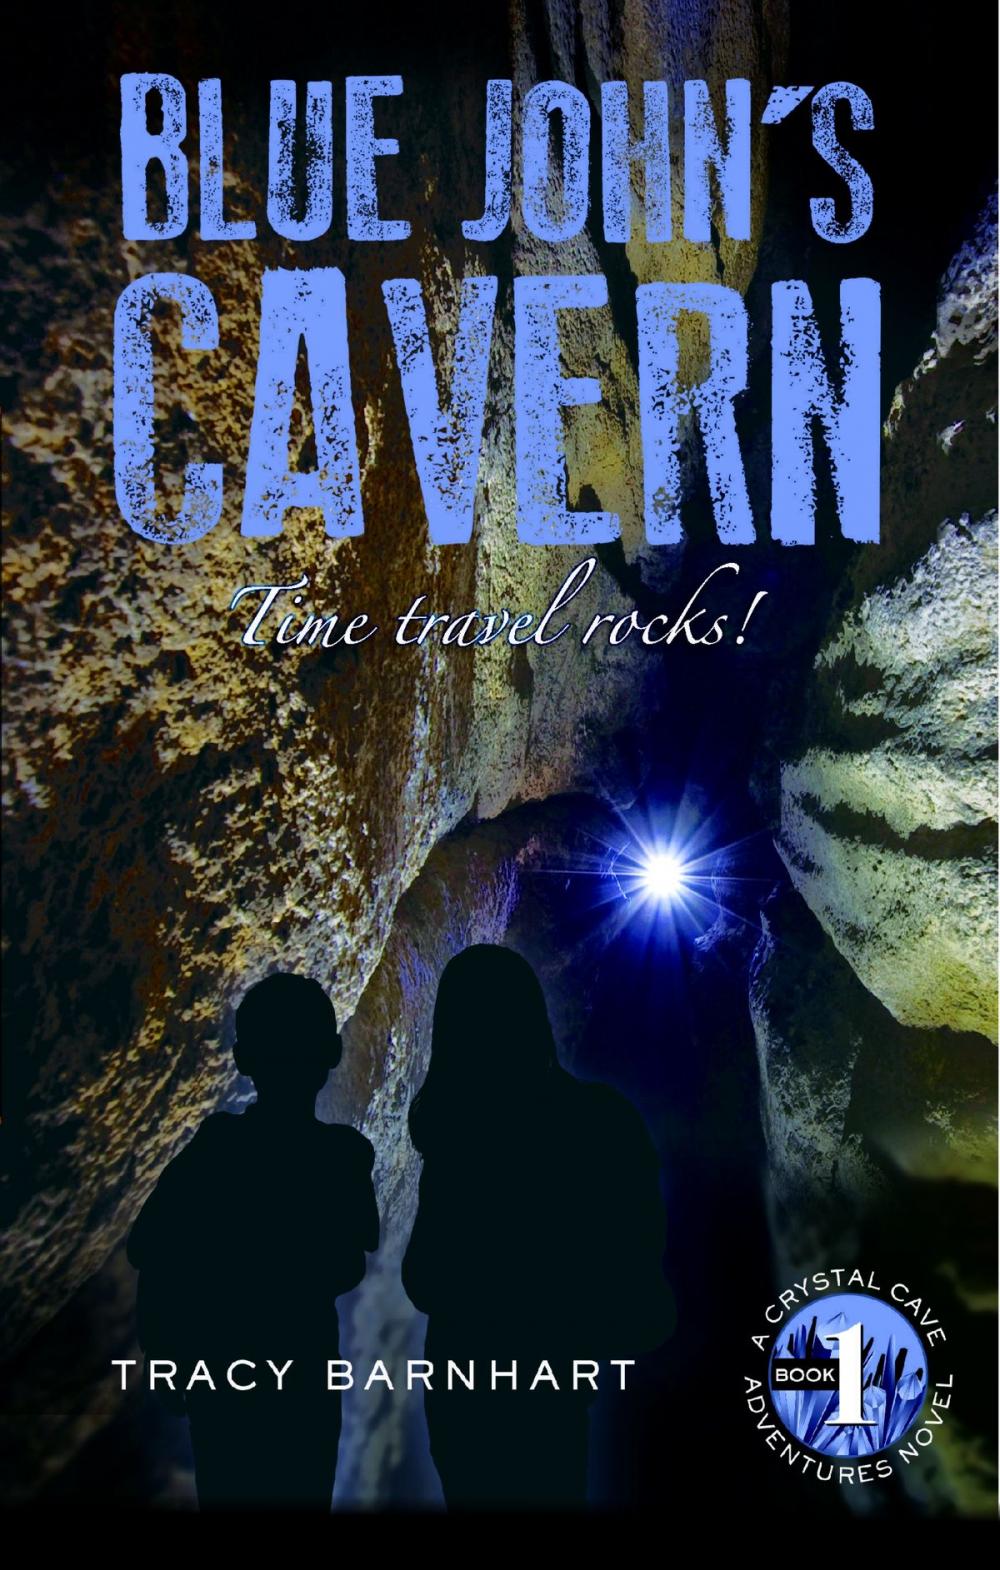 Big bigCover of Blue John's Cavern